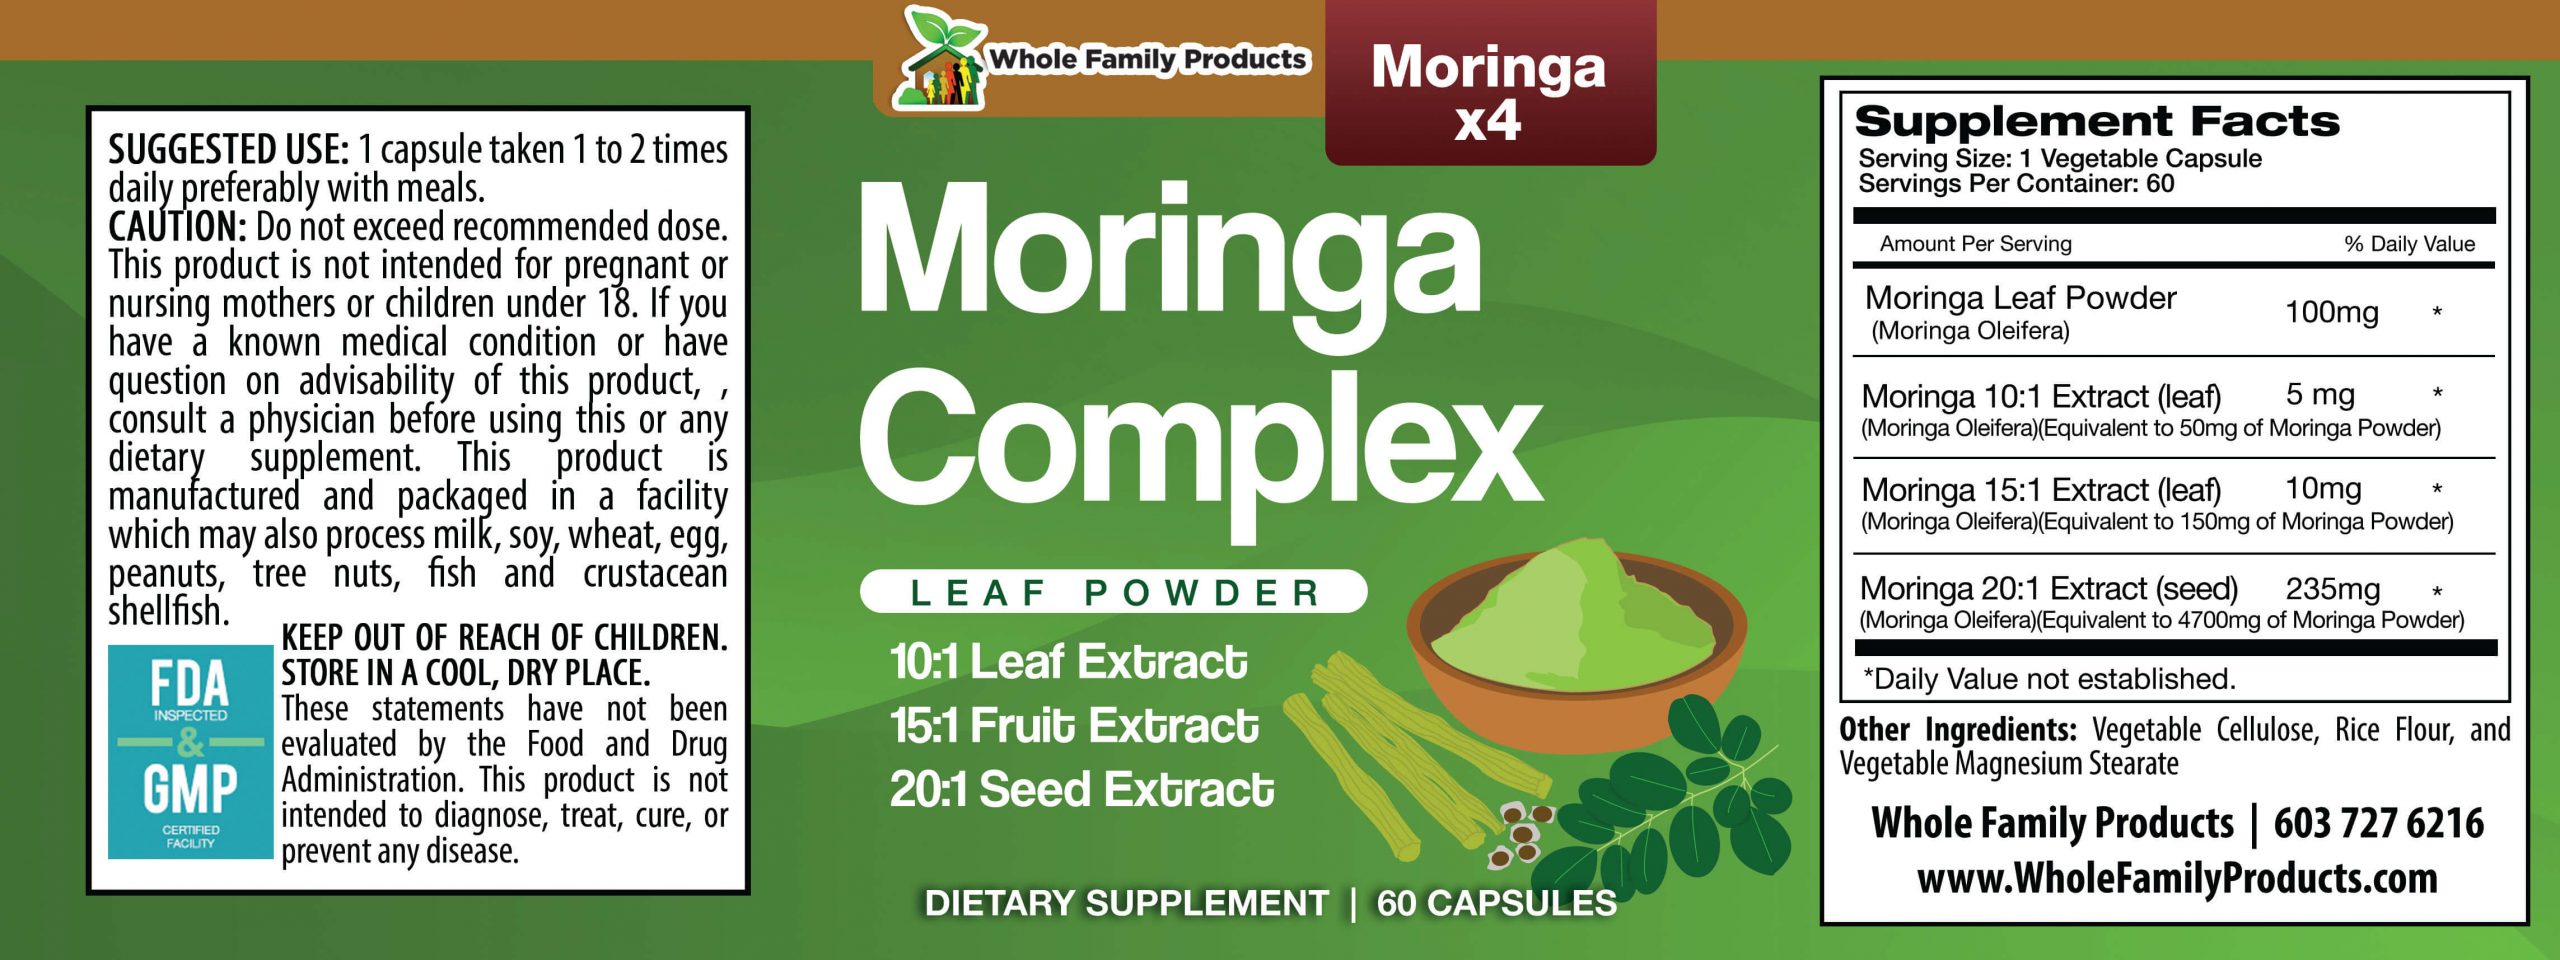 Moringa Complex 60 Capsules WFP Product Label